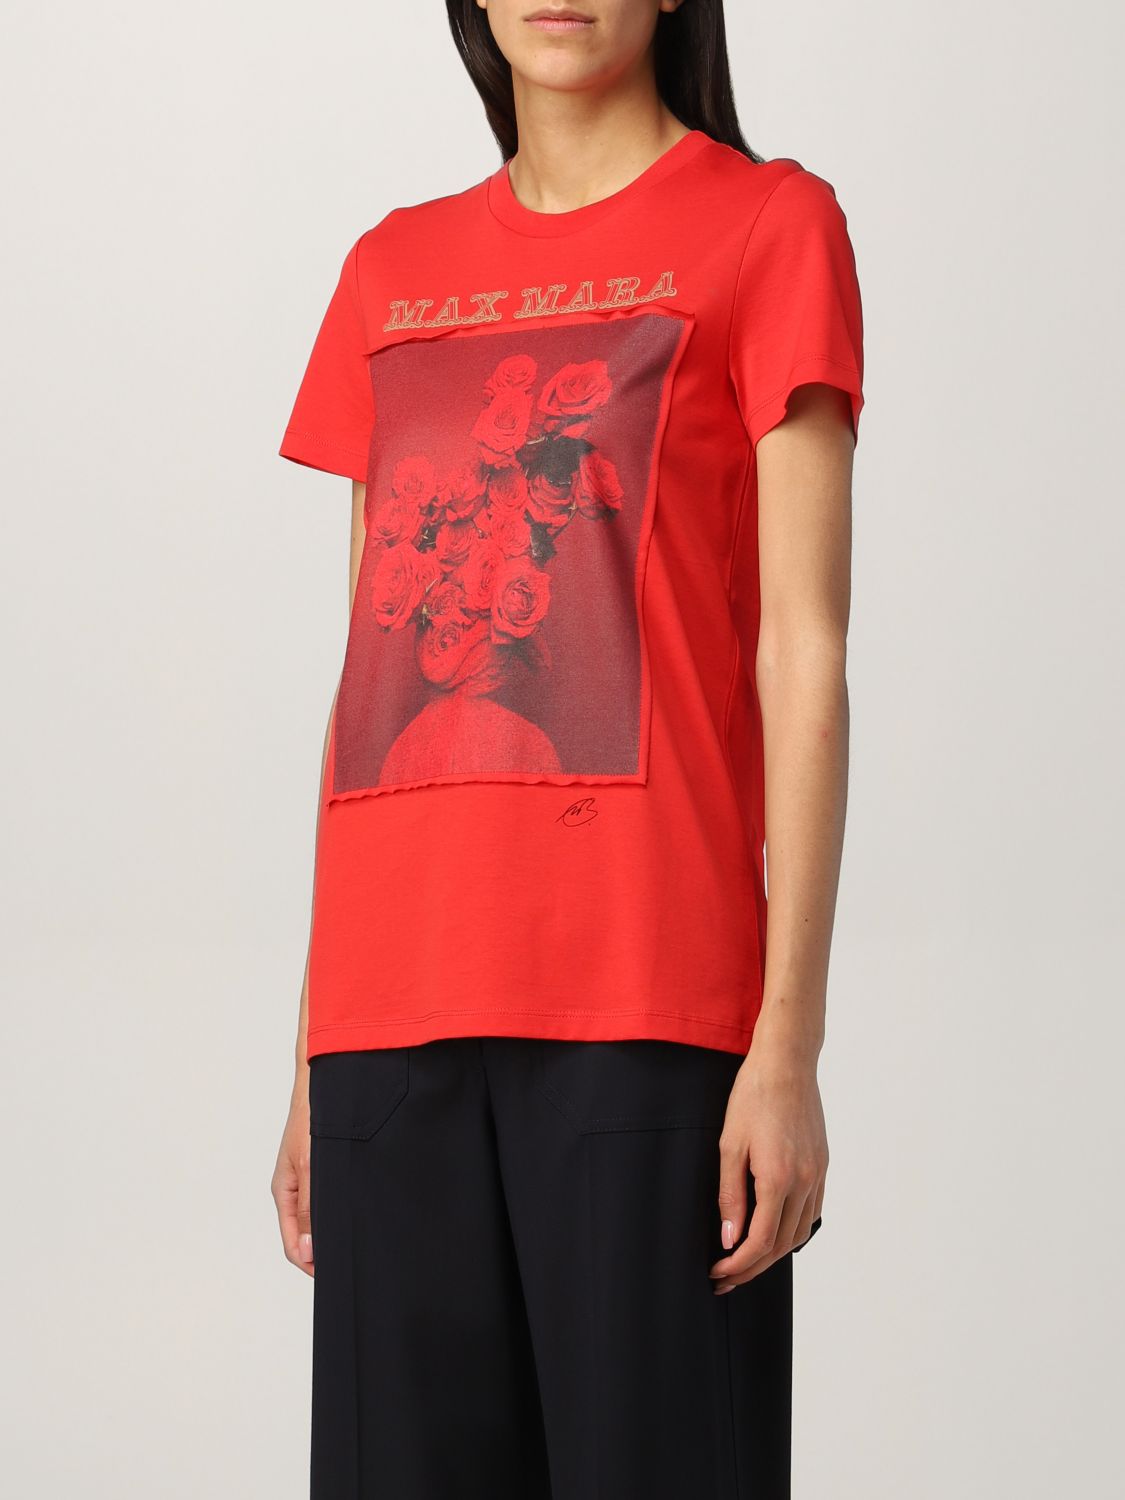 MAX MARA: Red cotton t-shirt with flower print - Red | Max Mara t-shirt ...